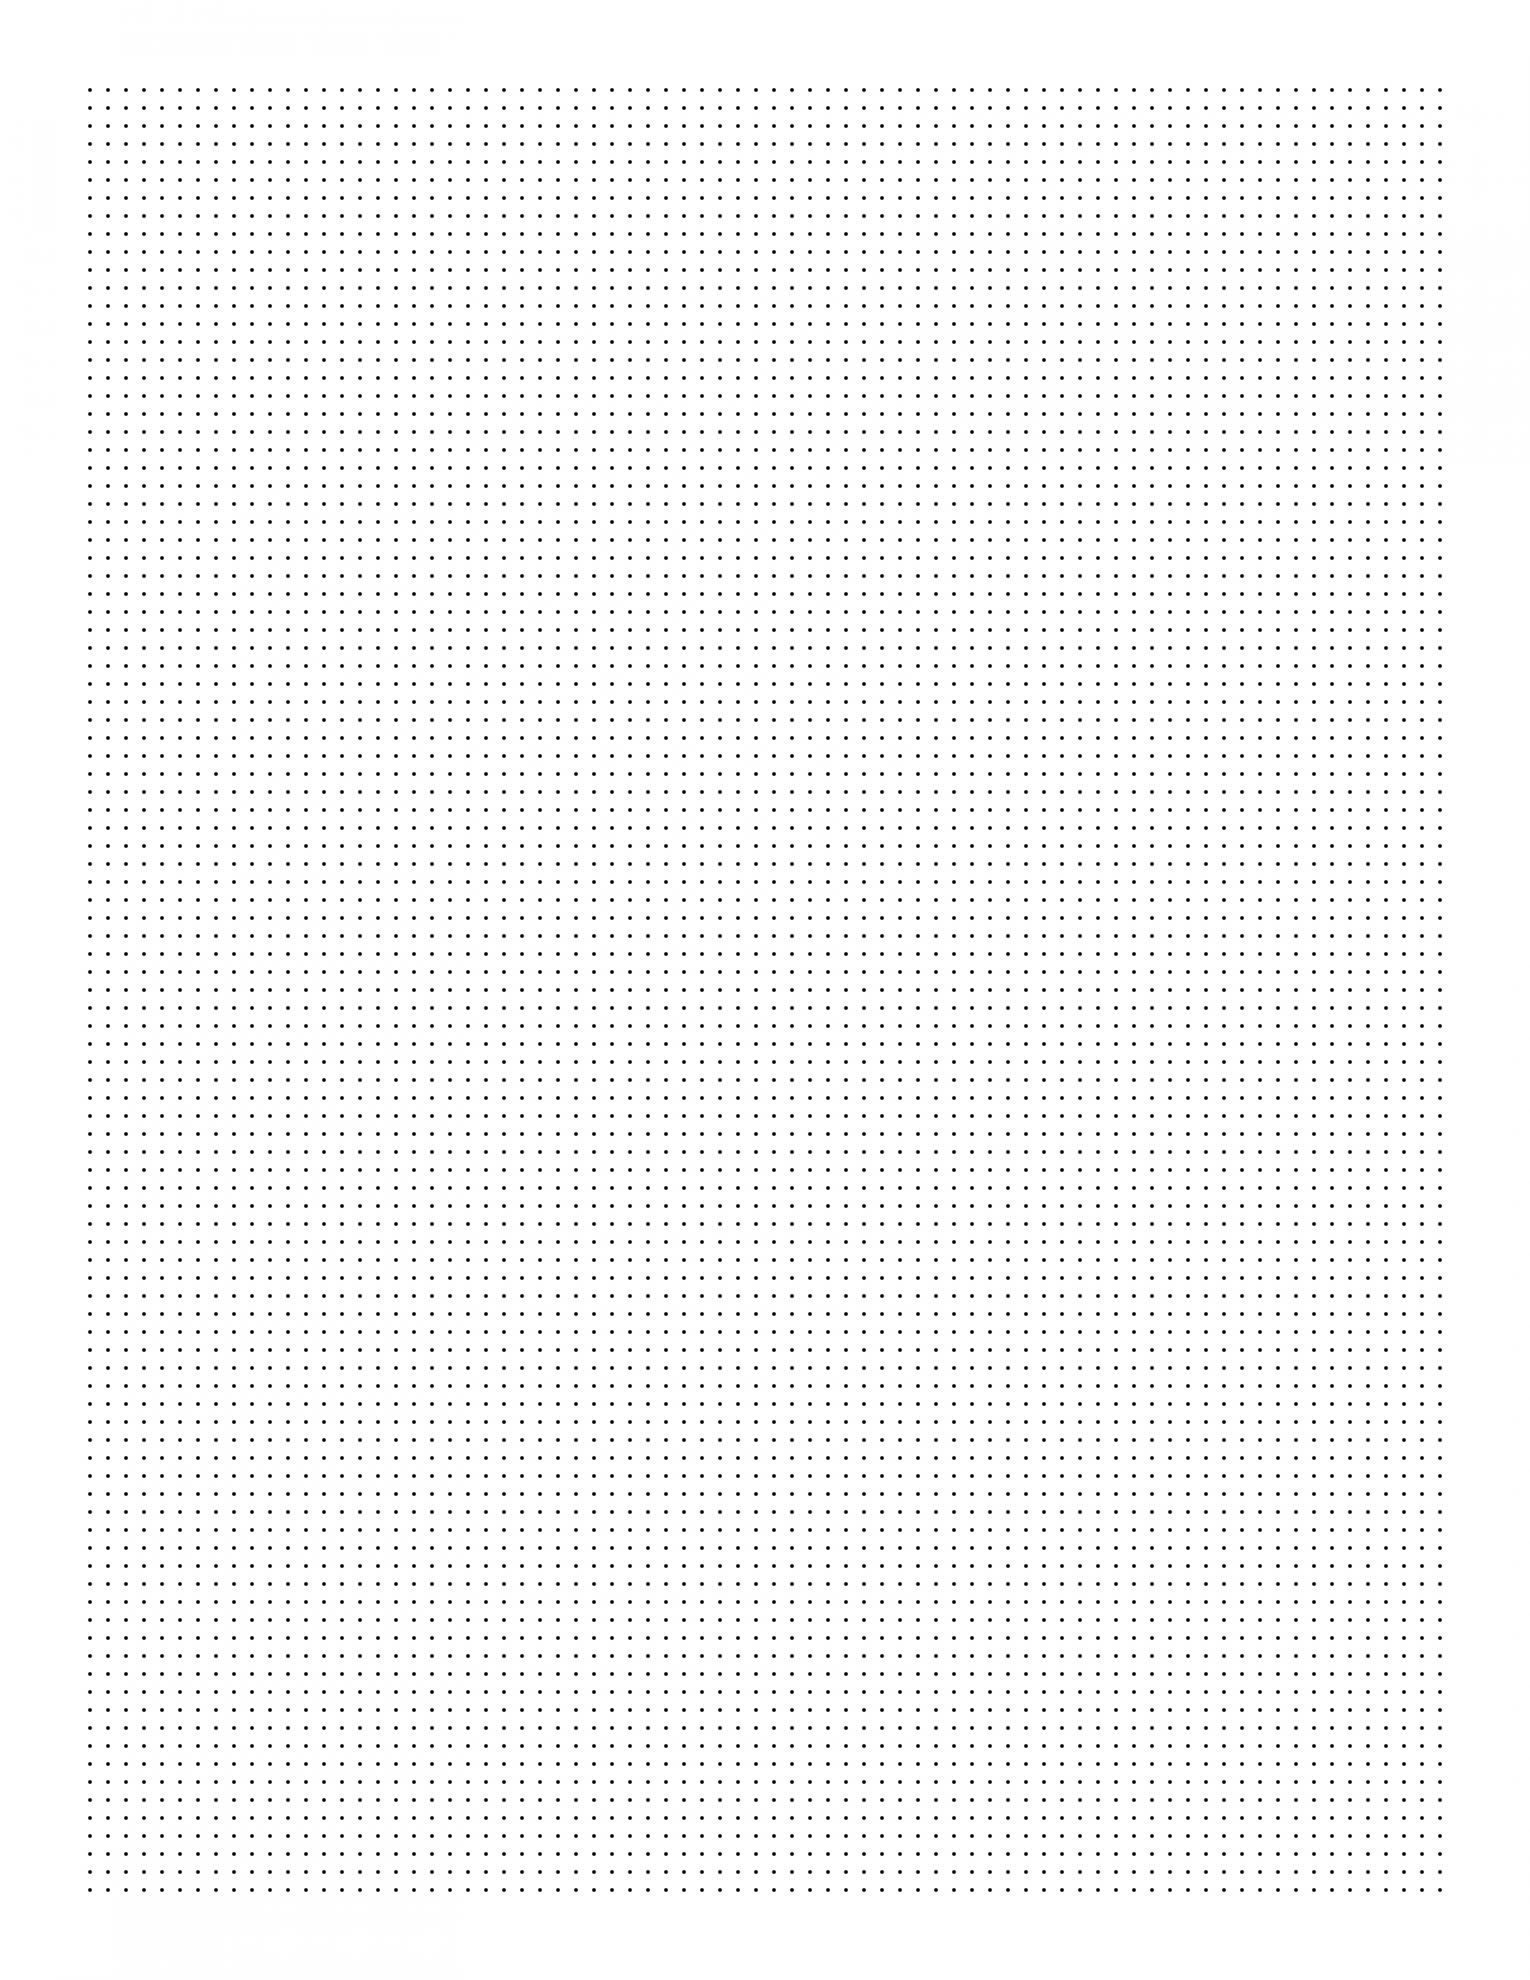 Free Online Graph Paper / Square Dots - FREE Printables - Dot Paper Printable